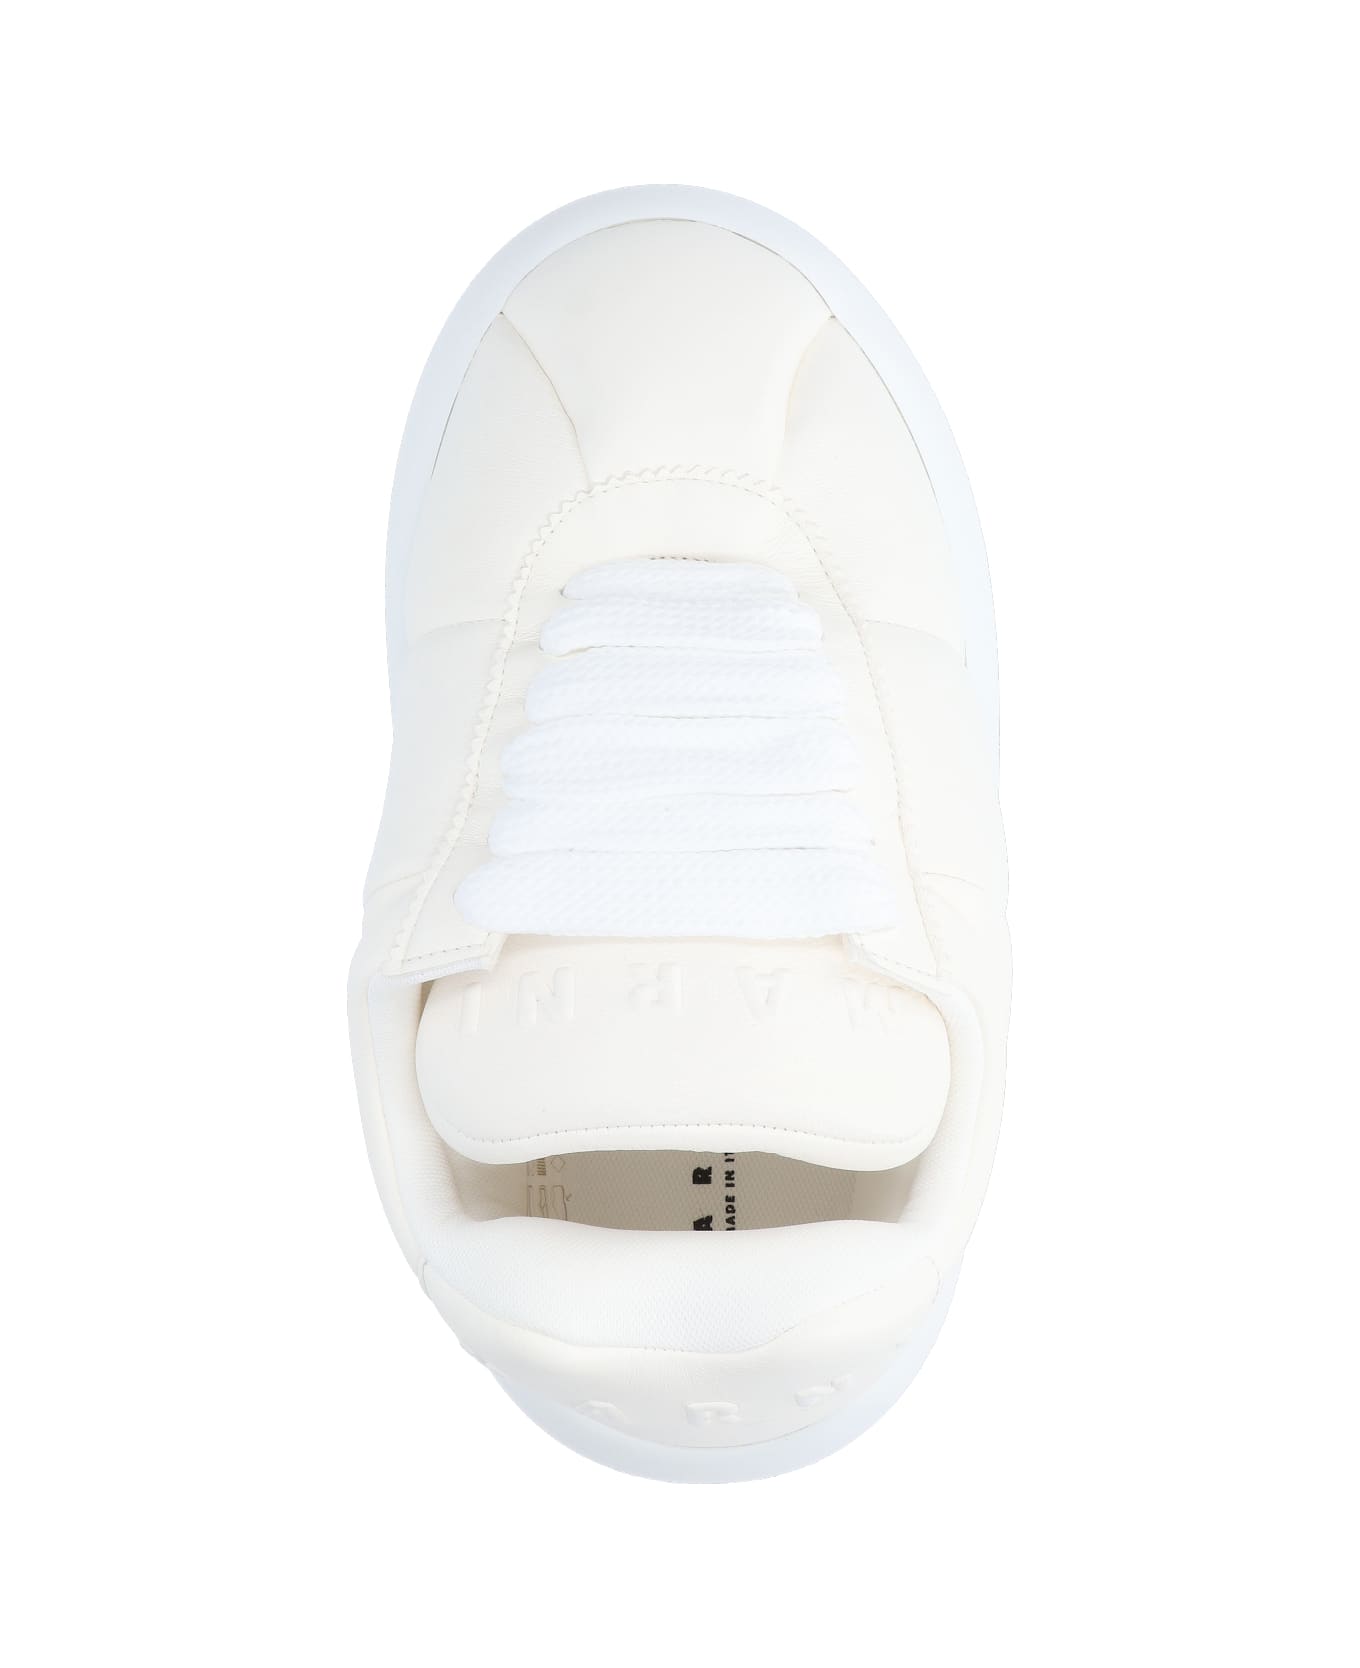 Marni 'bigfoot 2.0' Sneakers - Lily white